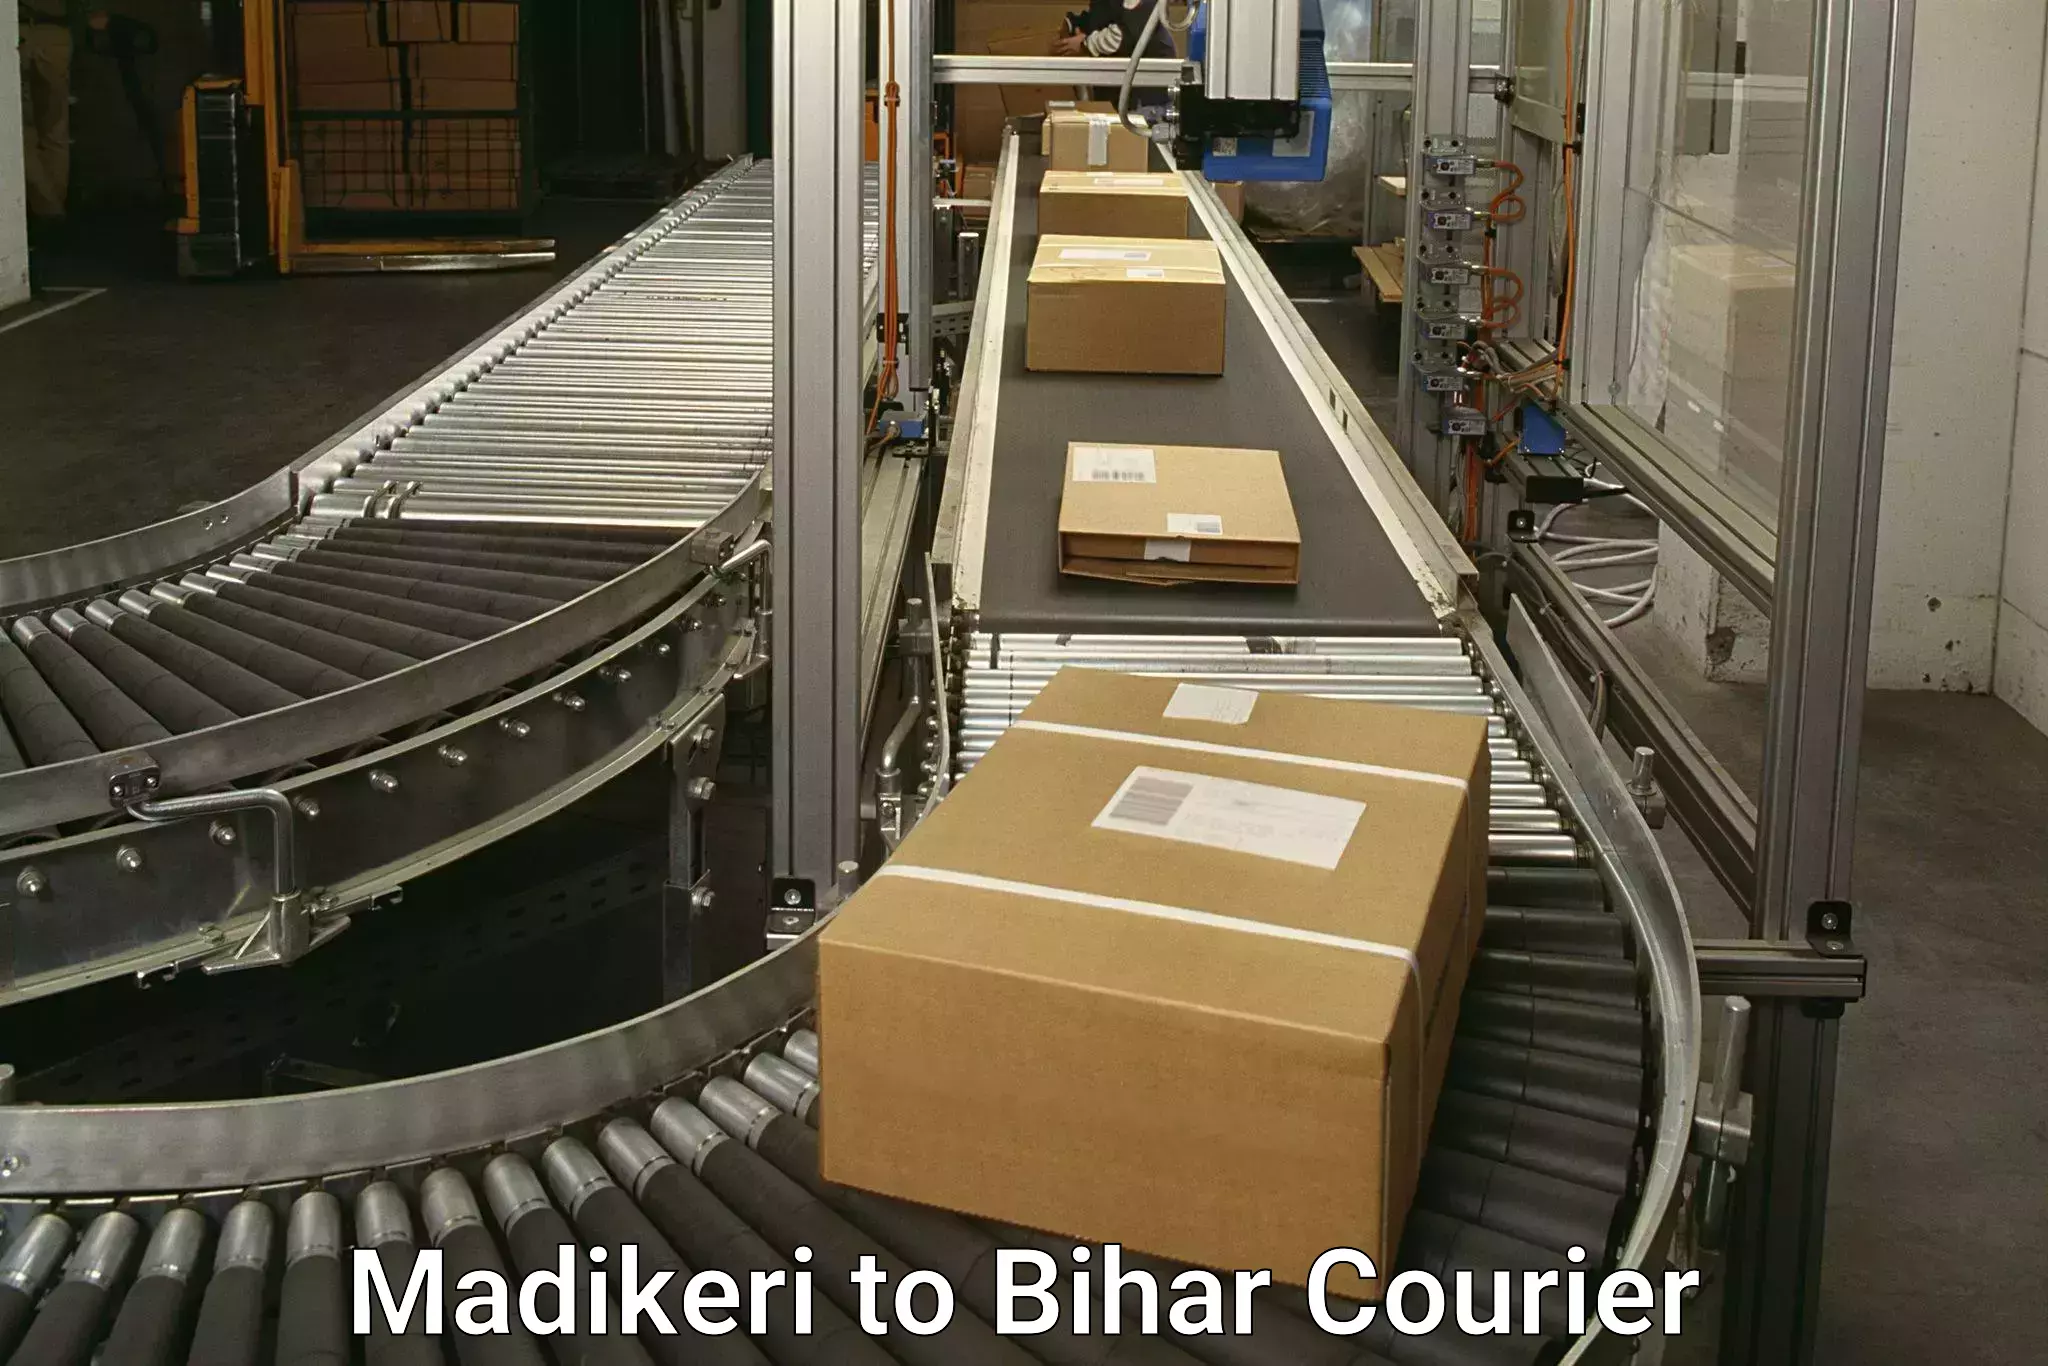 State-of-the-art courier technology Madikeri to Aurangabad Bihar